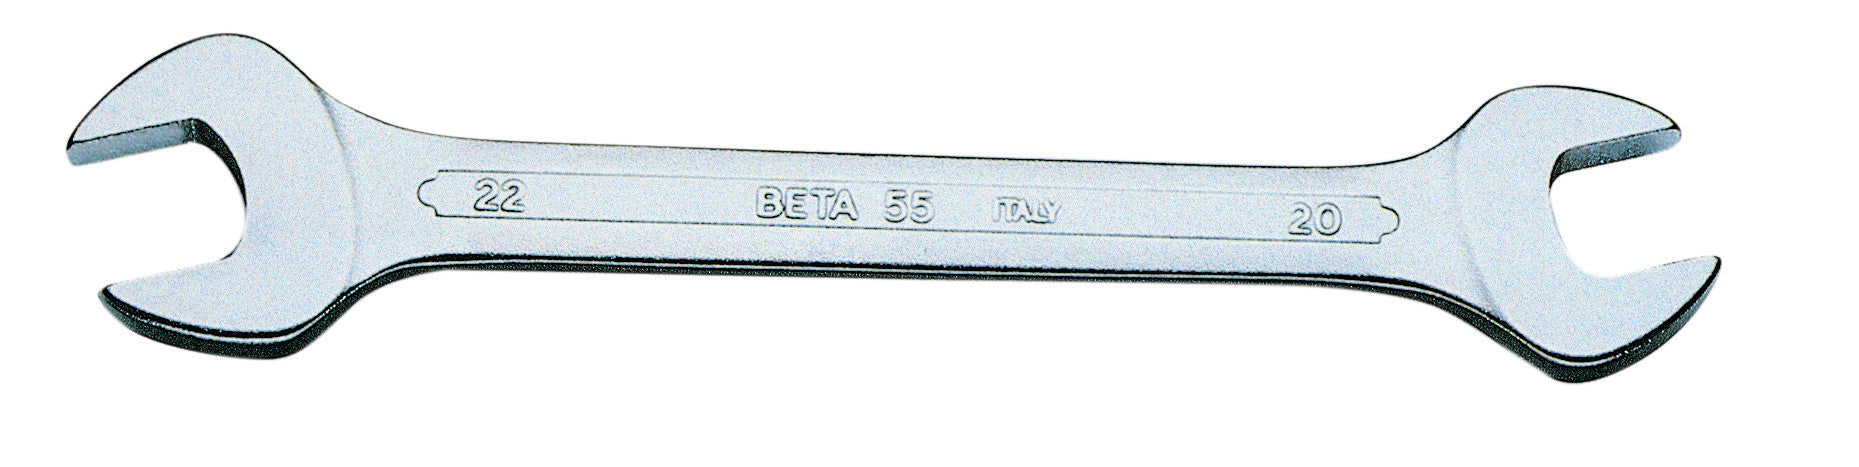 Pl beta art. 55 chiave a forc.doppia mm. 4/5